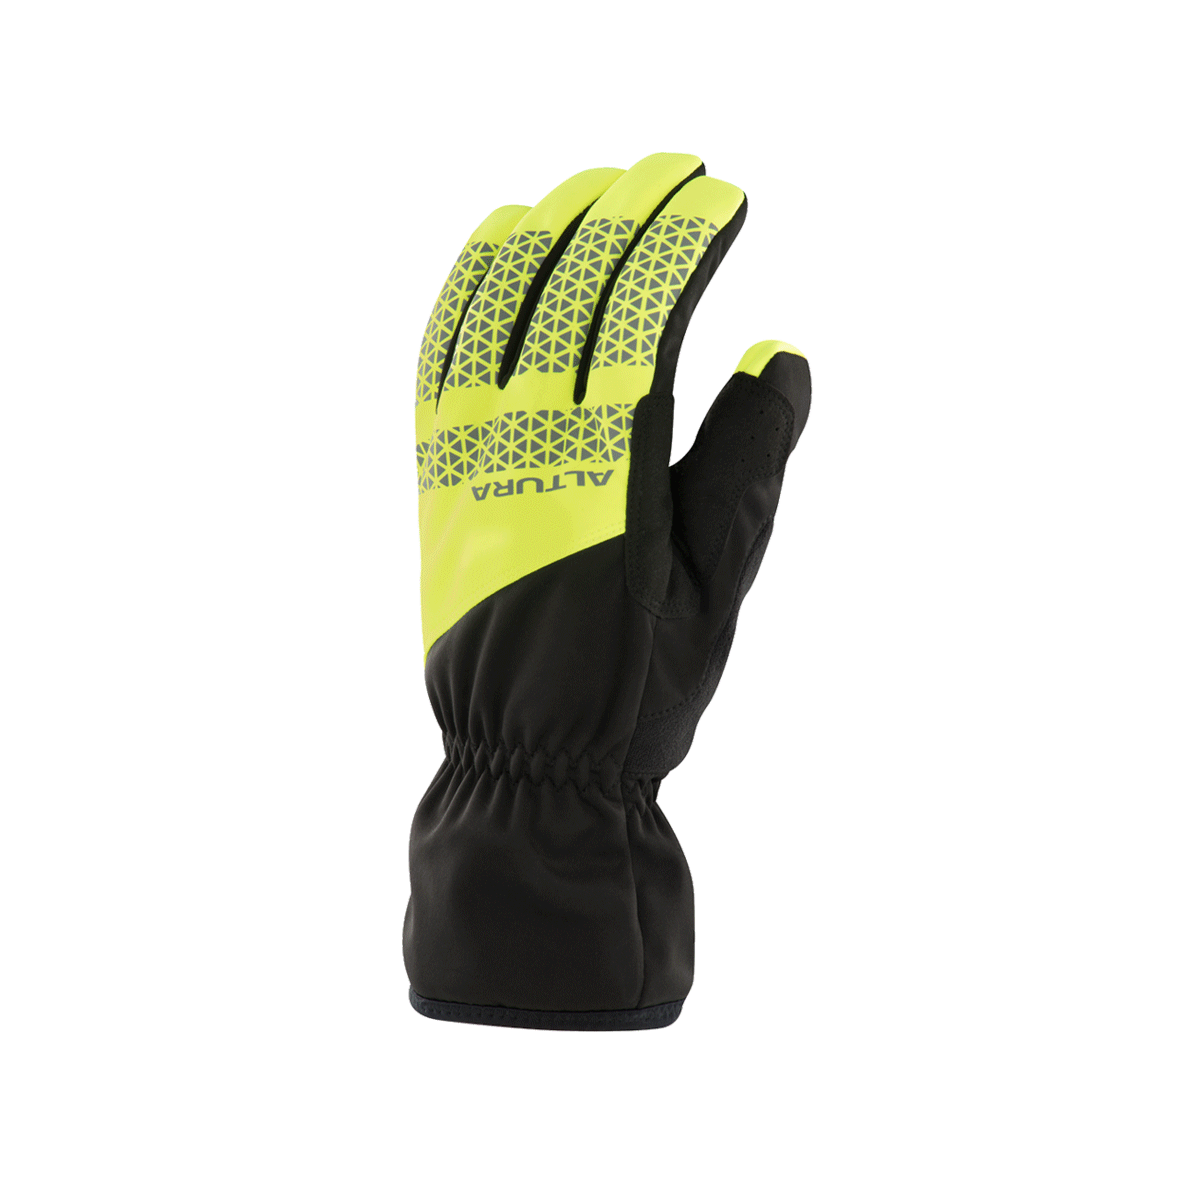 altura nightvision waterproof gloves